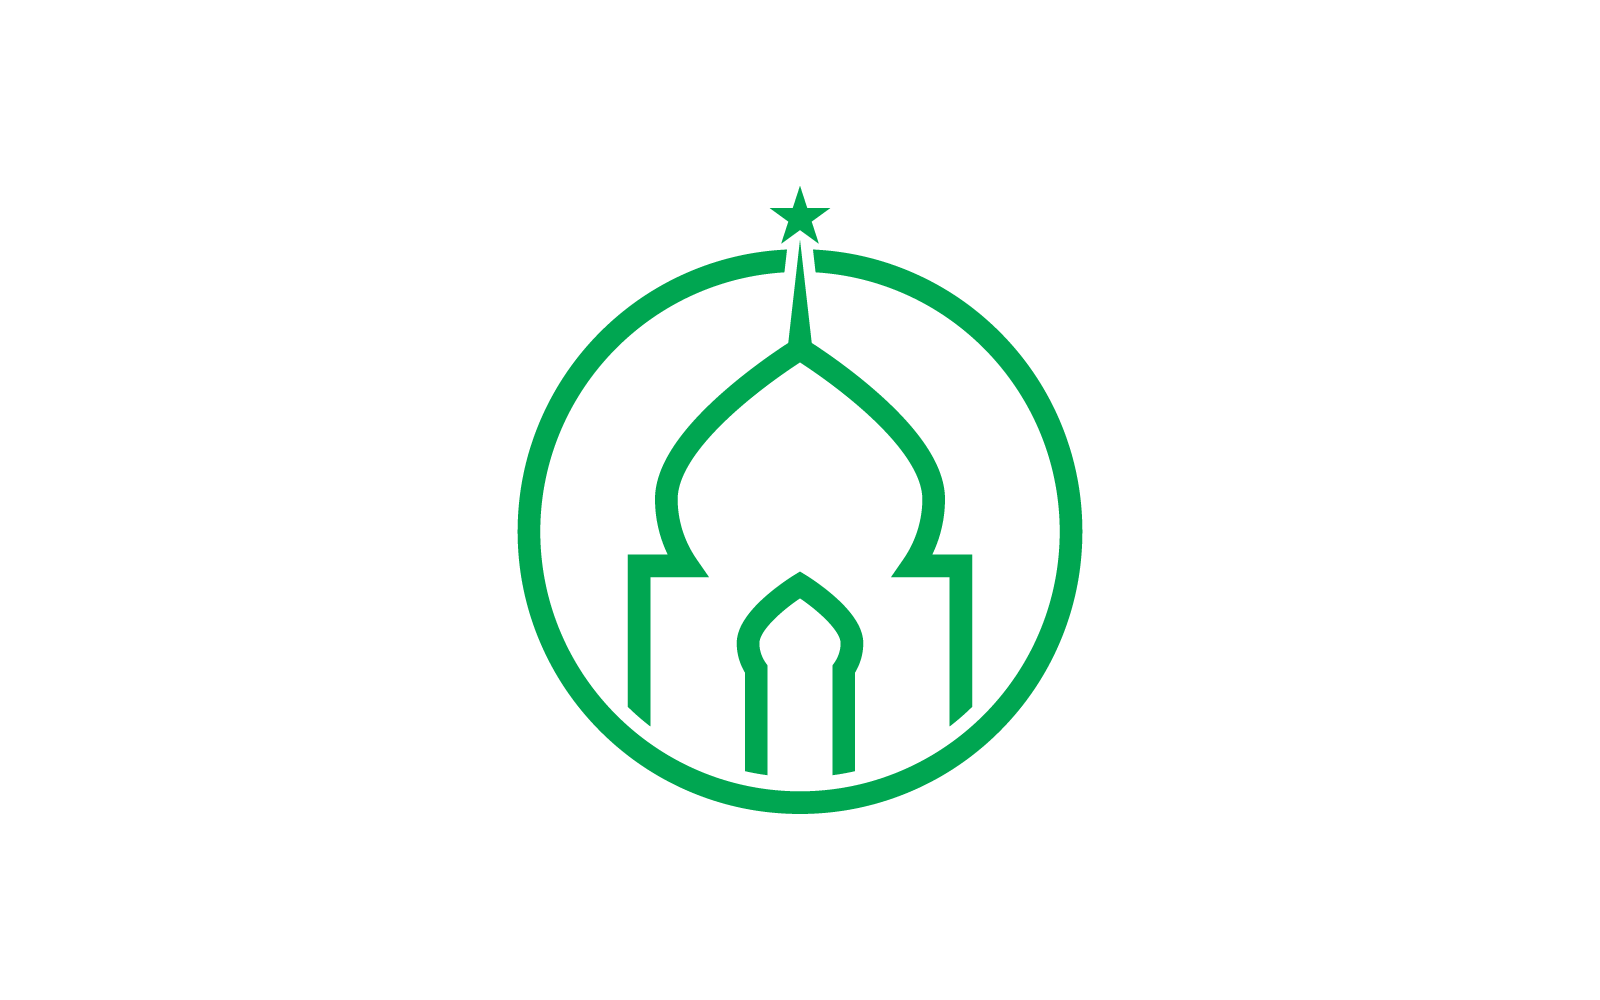 Islamic logo, Mosque,ramadhan kareem design template